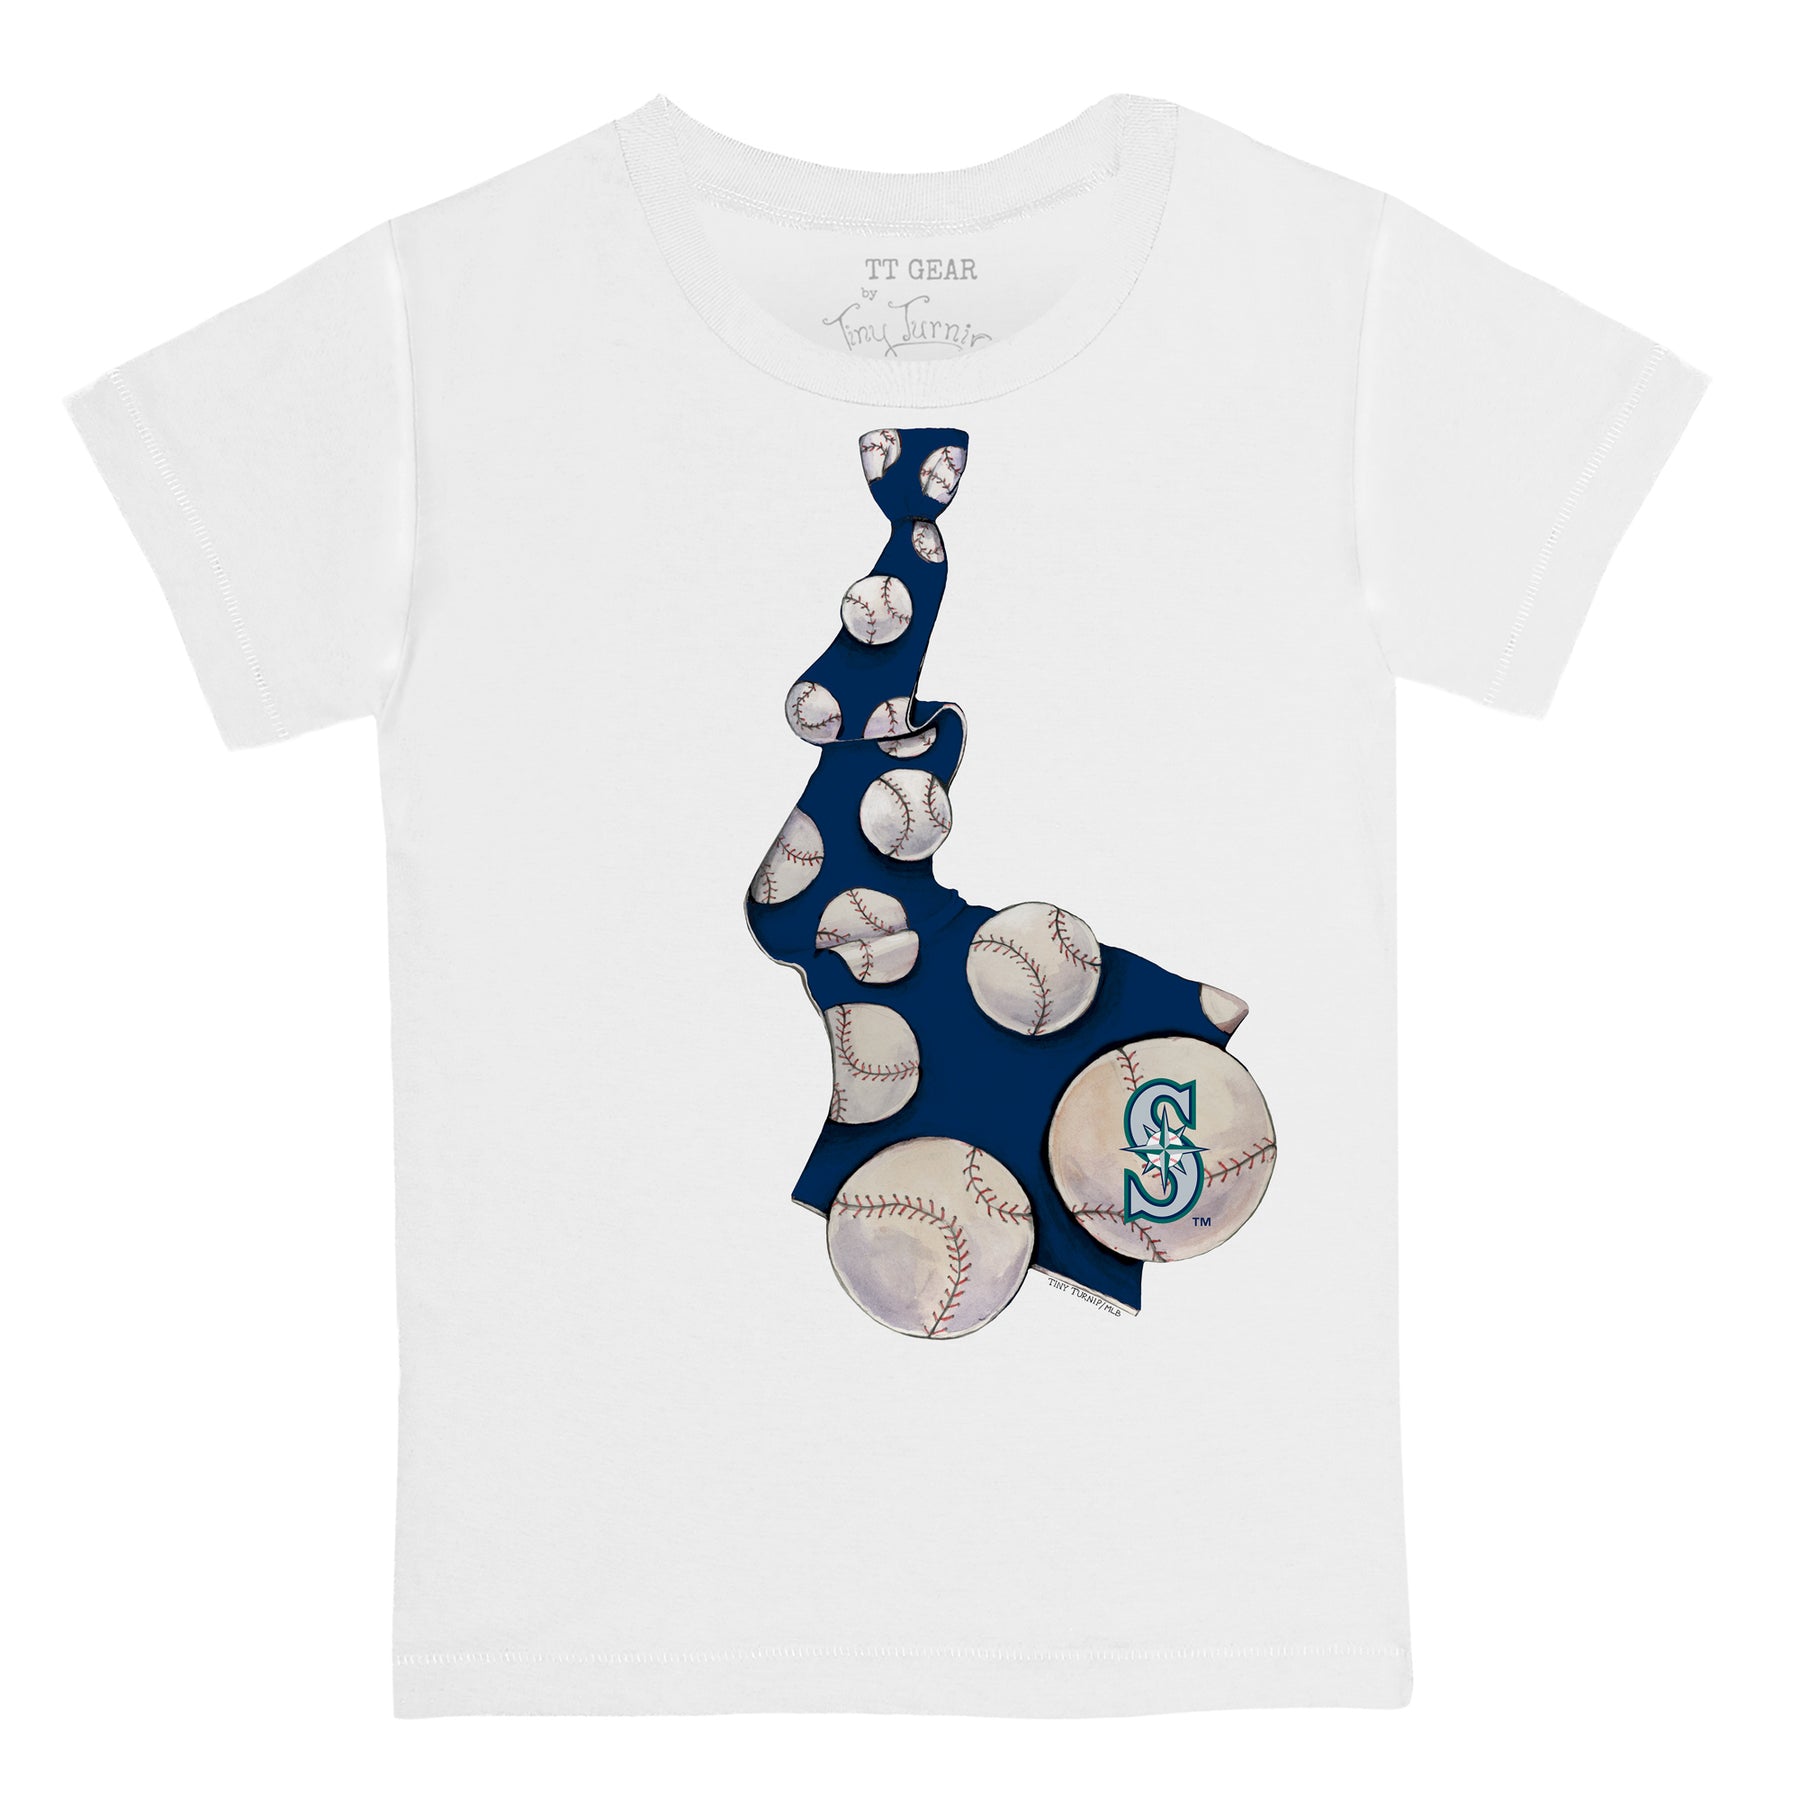 Seattle Mariners Slugger Tee Shirt 6M / White